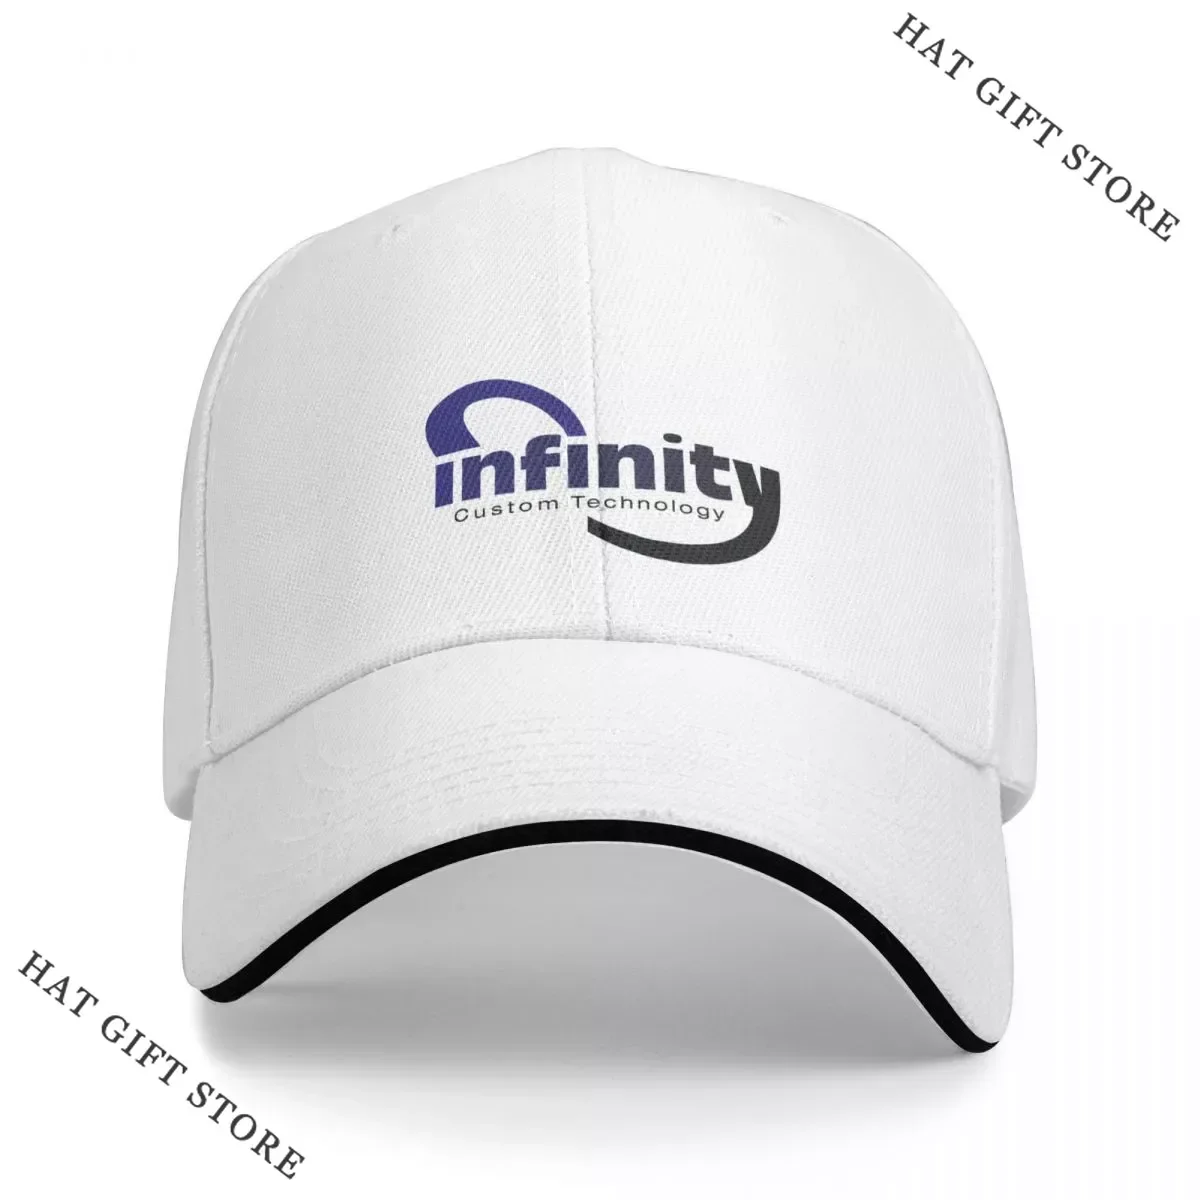 

Hot Infinity Custom Technology Cap Baseball Cap Christmas hats fishing hat baseball cap |-f-| hats for women Men's